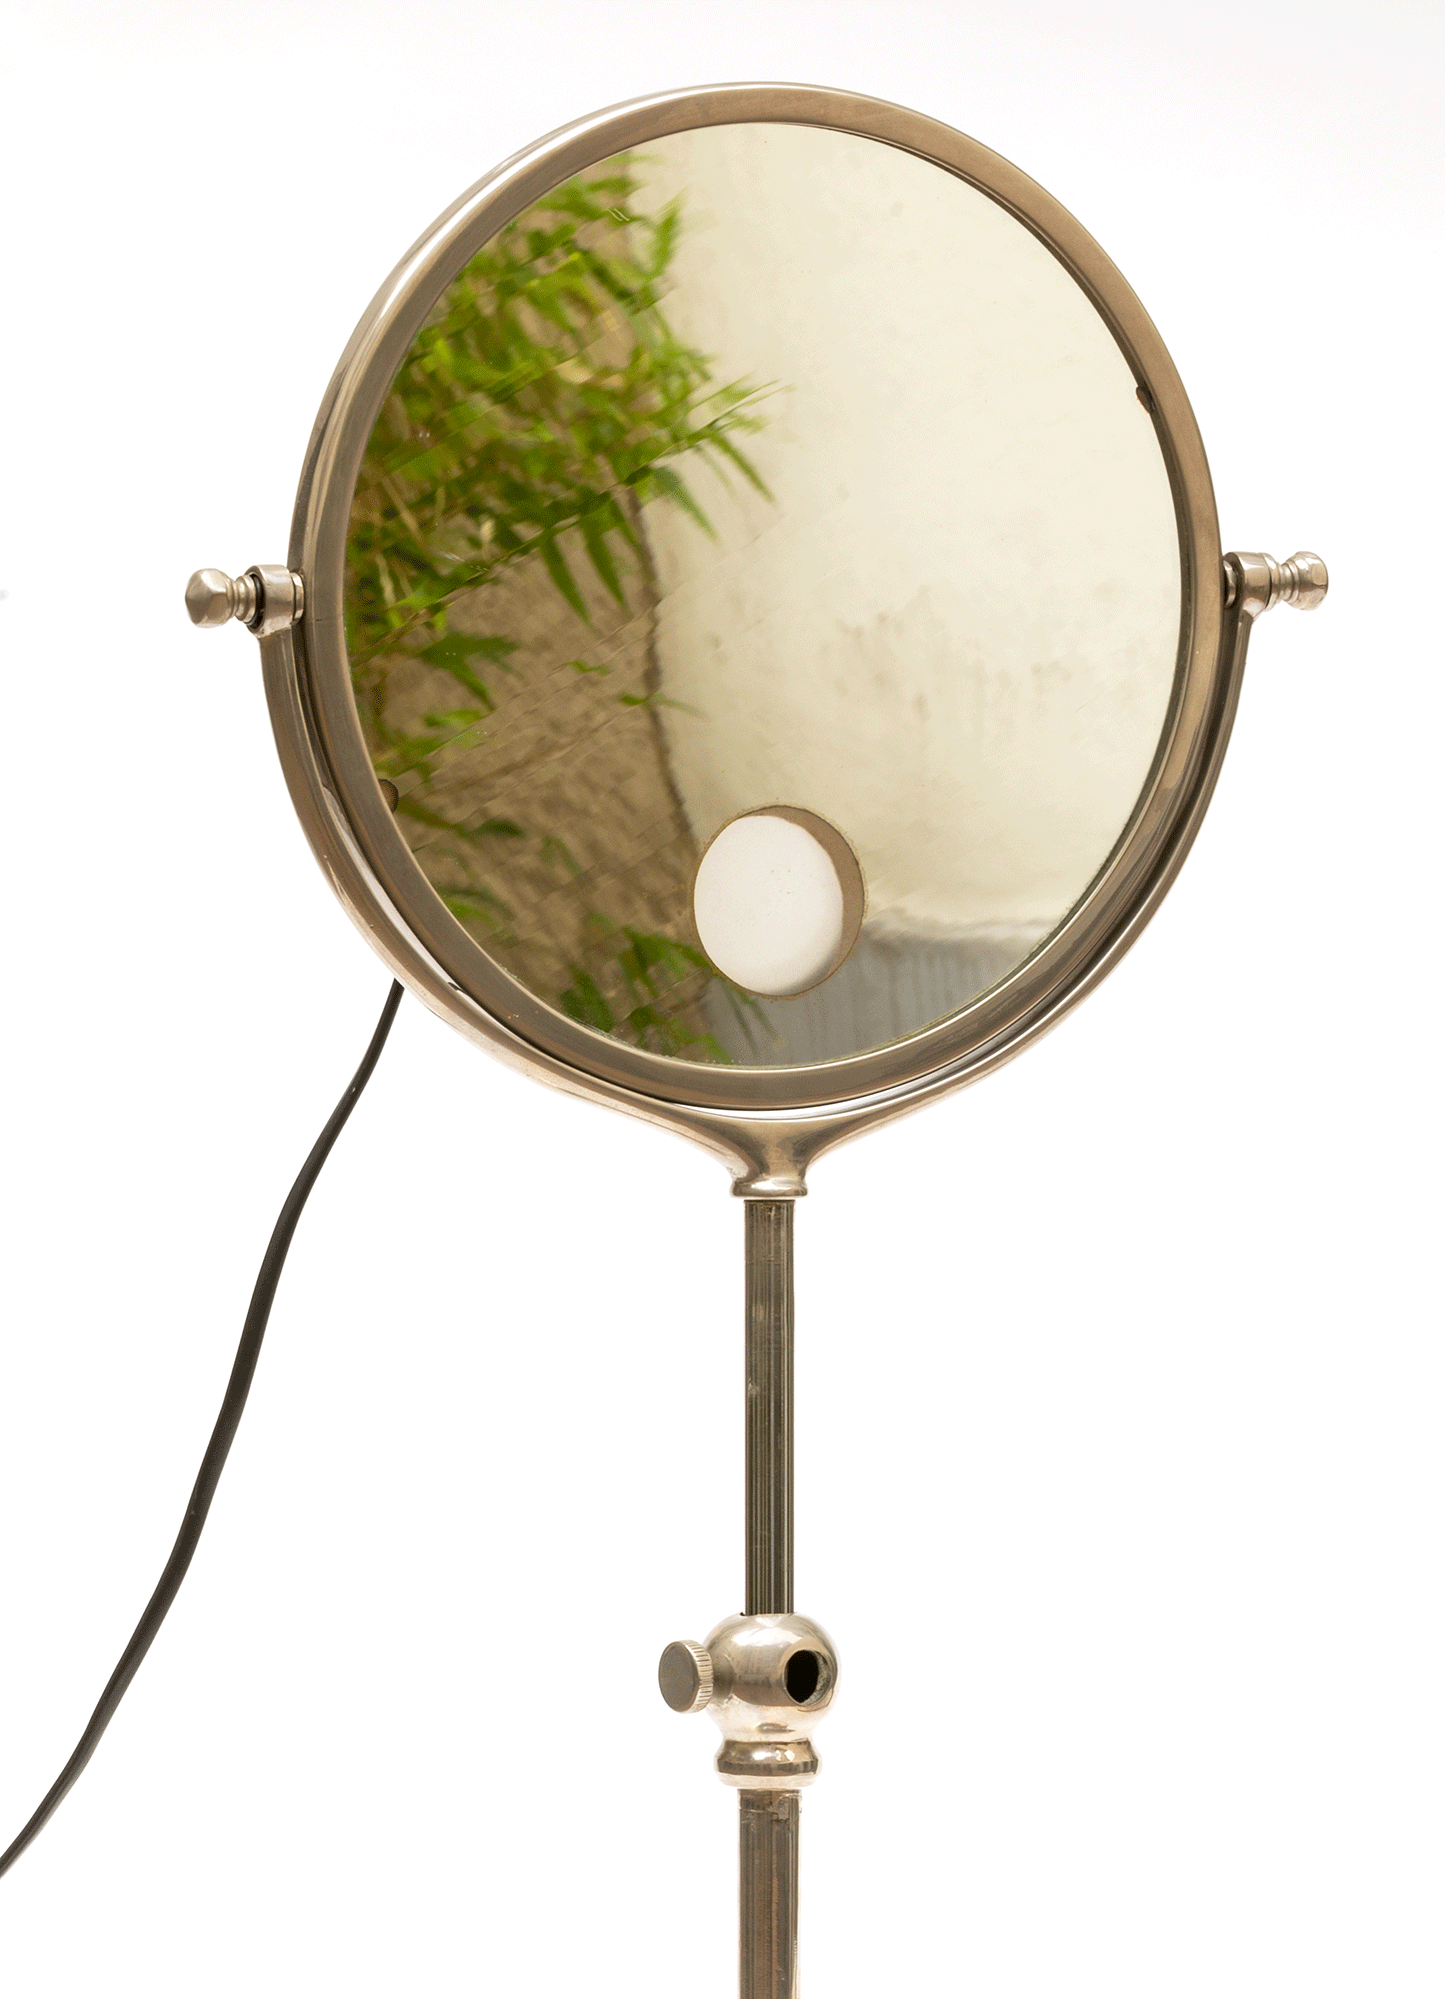 Art Deco French Nickel-Plated Illuminated Vanity Mirror by Brot, 1930s